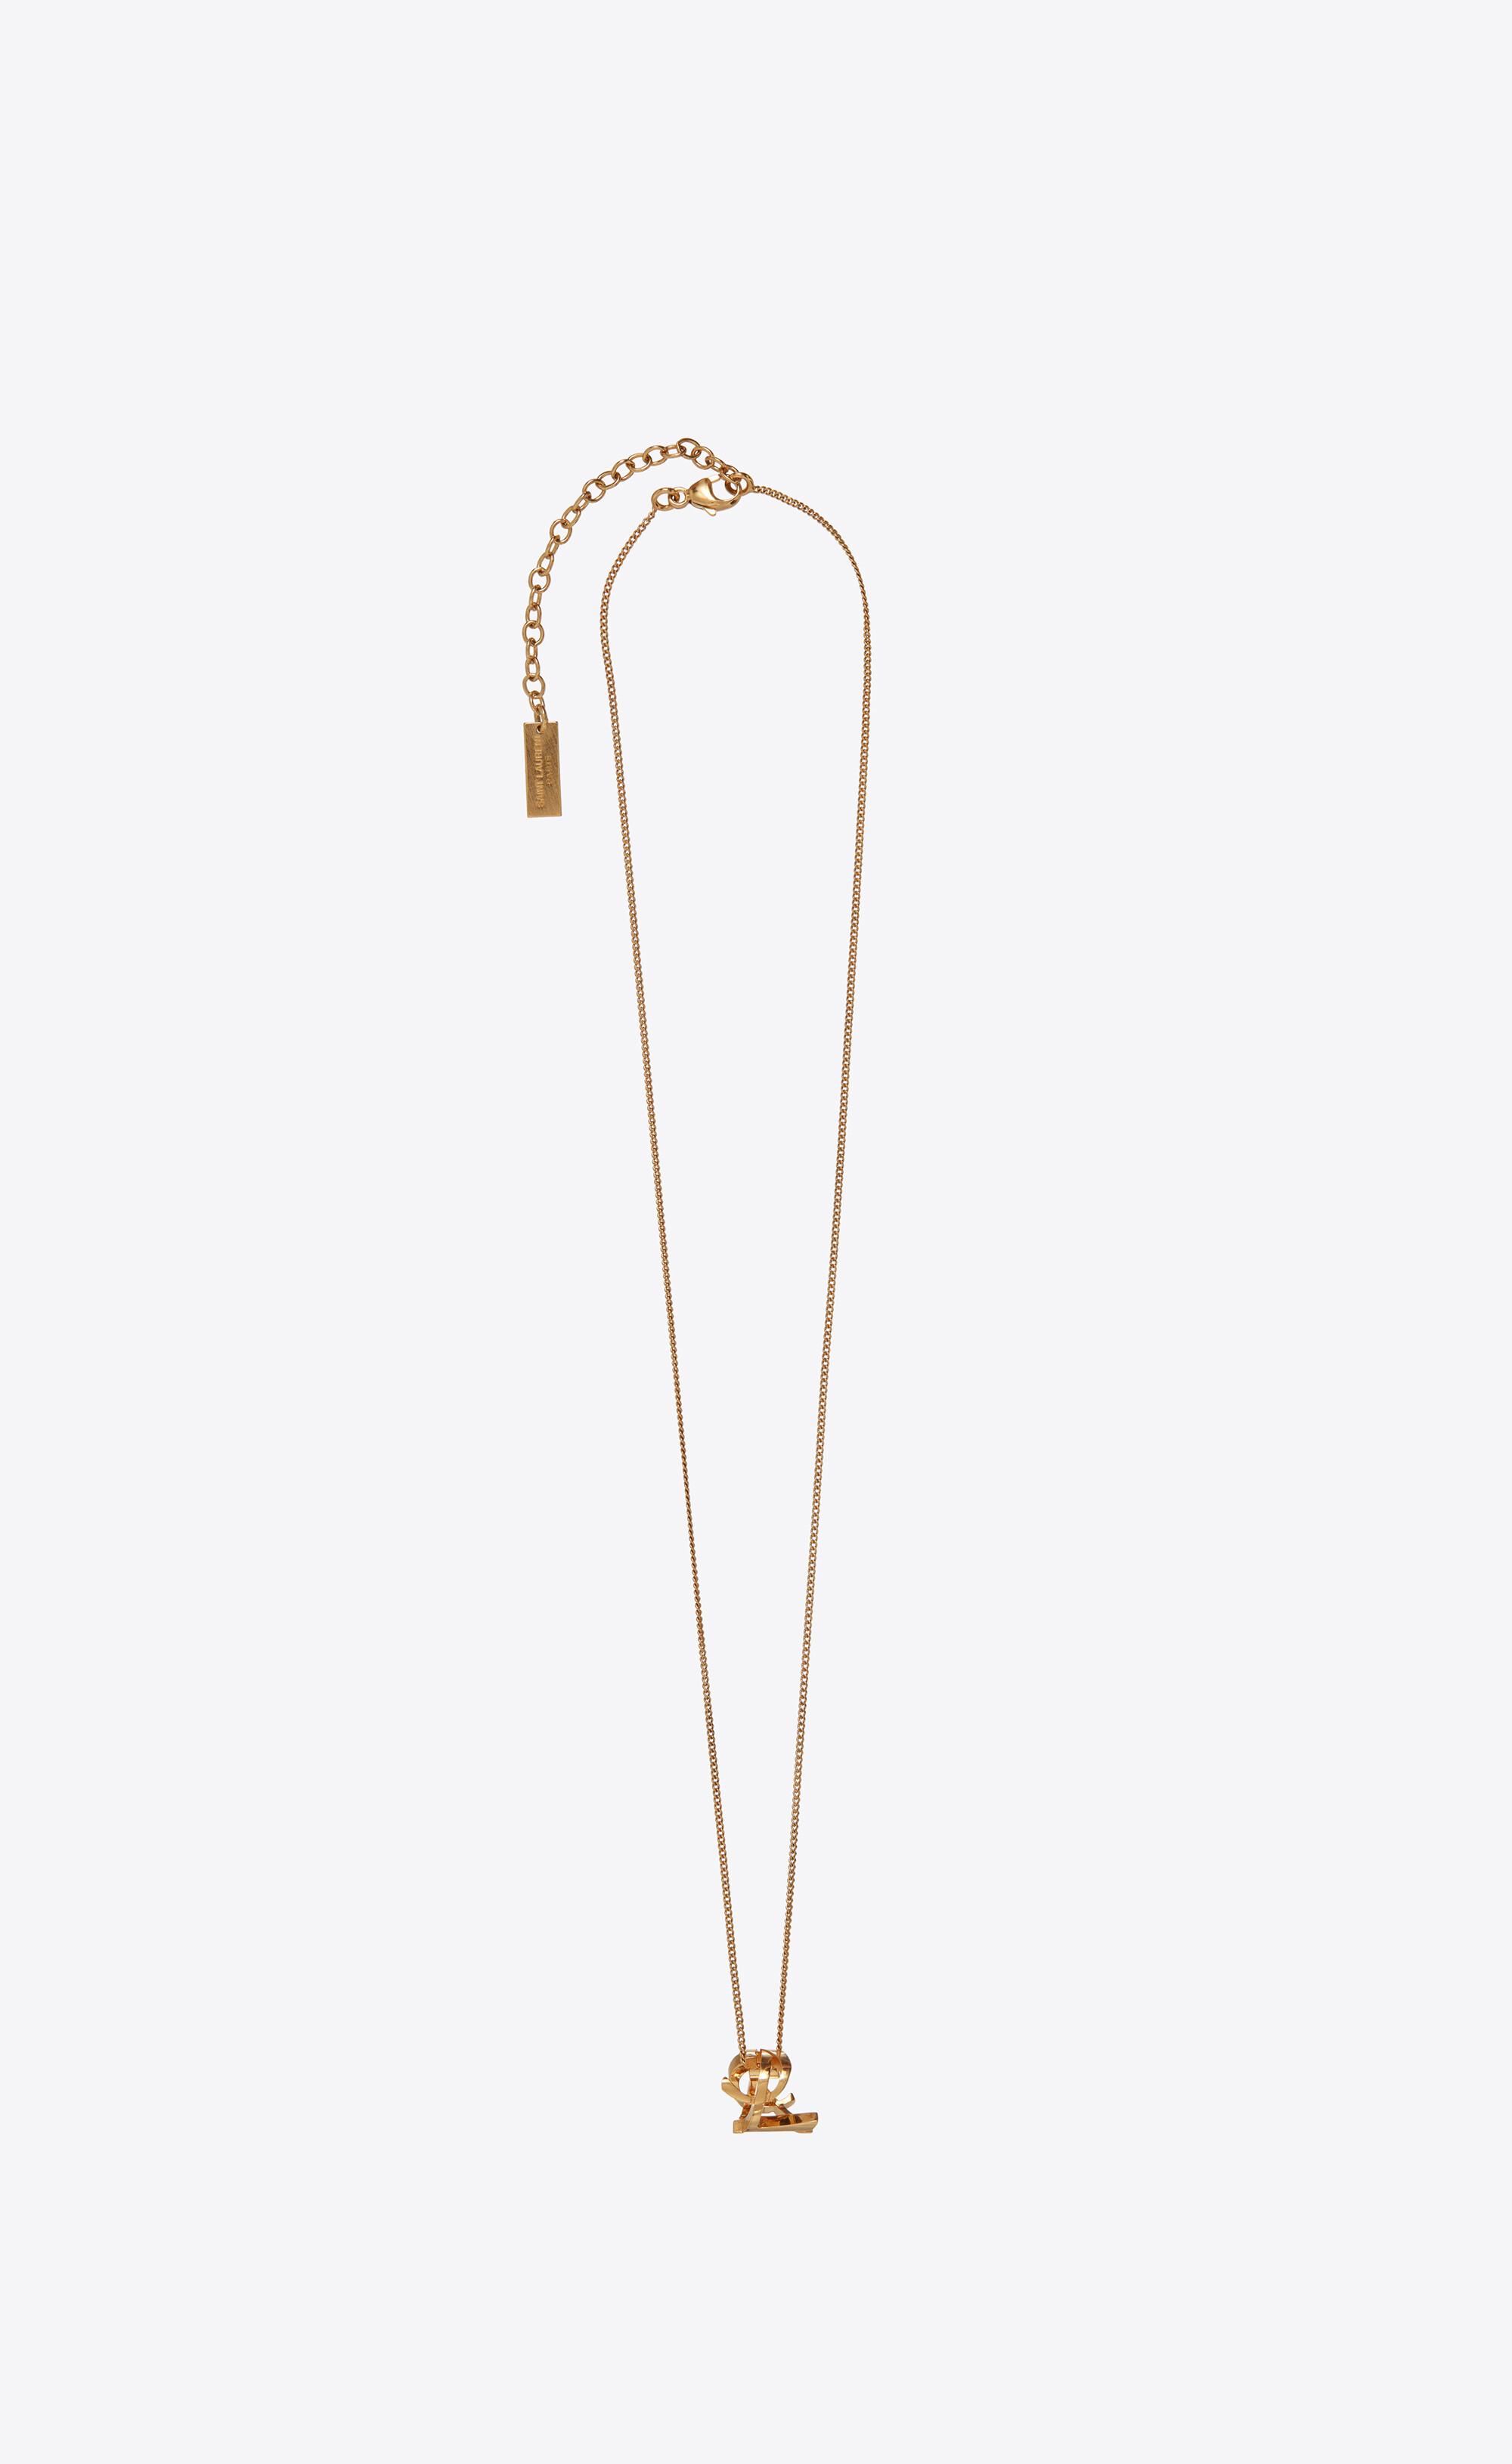 Saint Laurent Ysl Plaque Necklace in Gold (Metallic) - Save 37% | Lyst